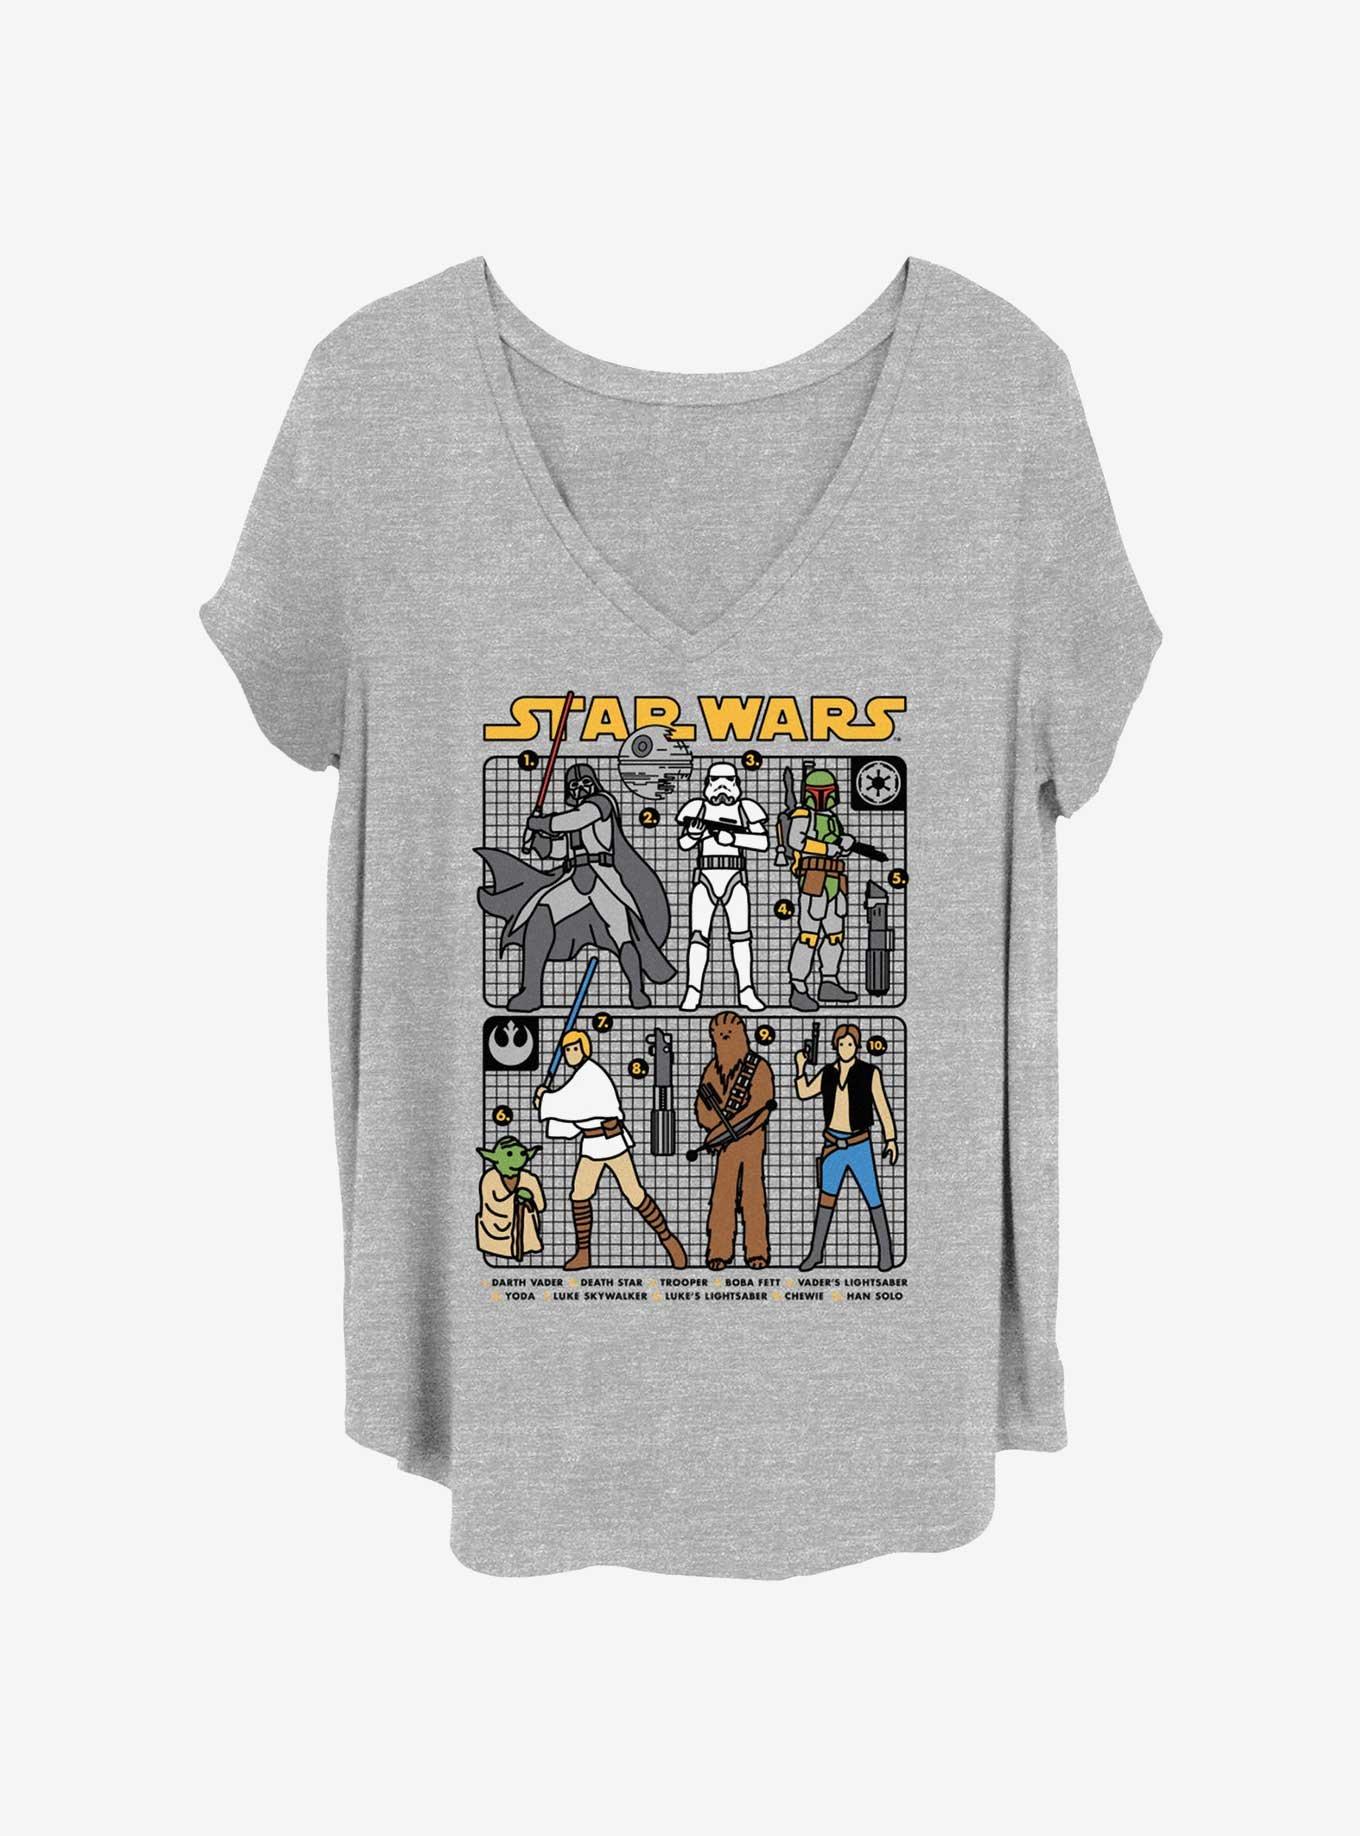 Star Wars Character Grid Infocard Girls T-Shirt Plus Size, , hi-res